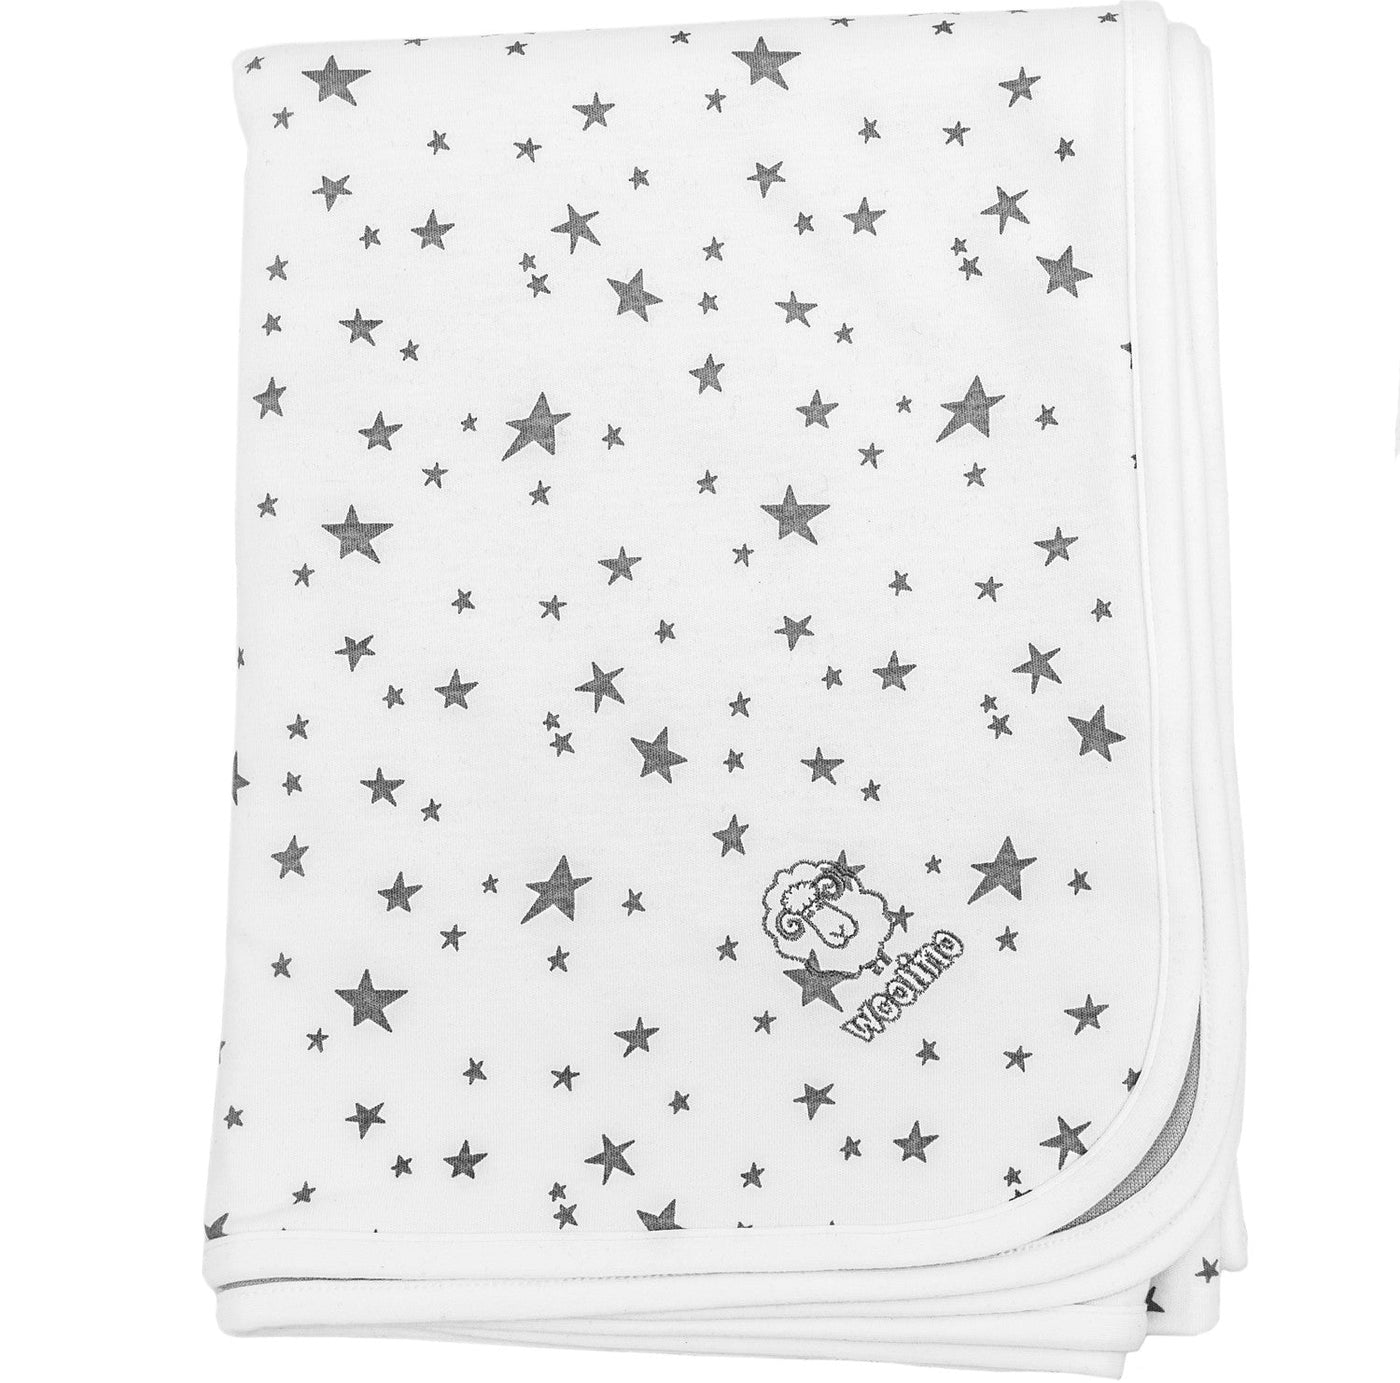 4 Season® Stroller Merino Wool Baby Blanket, 40" x 31.5", Star White